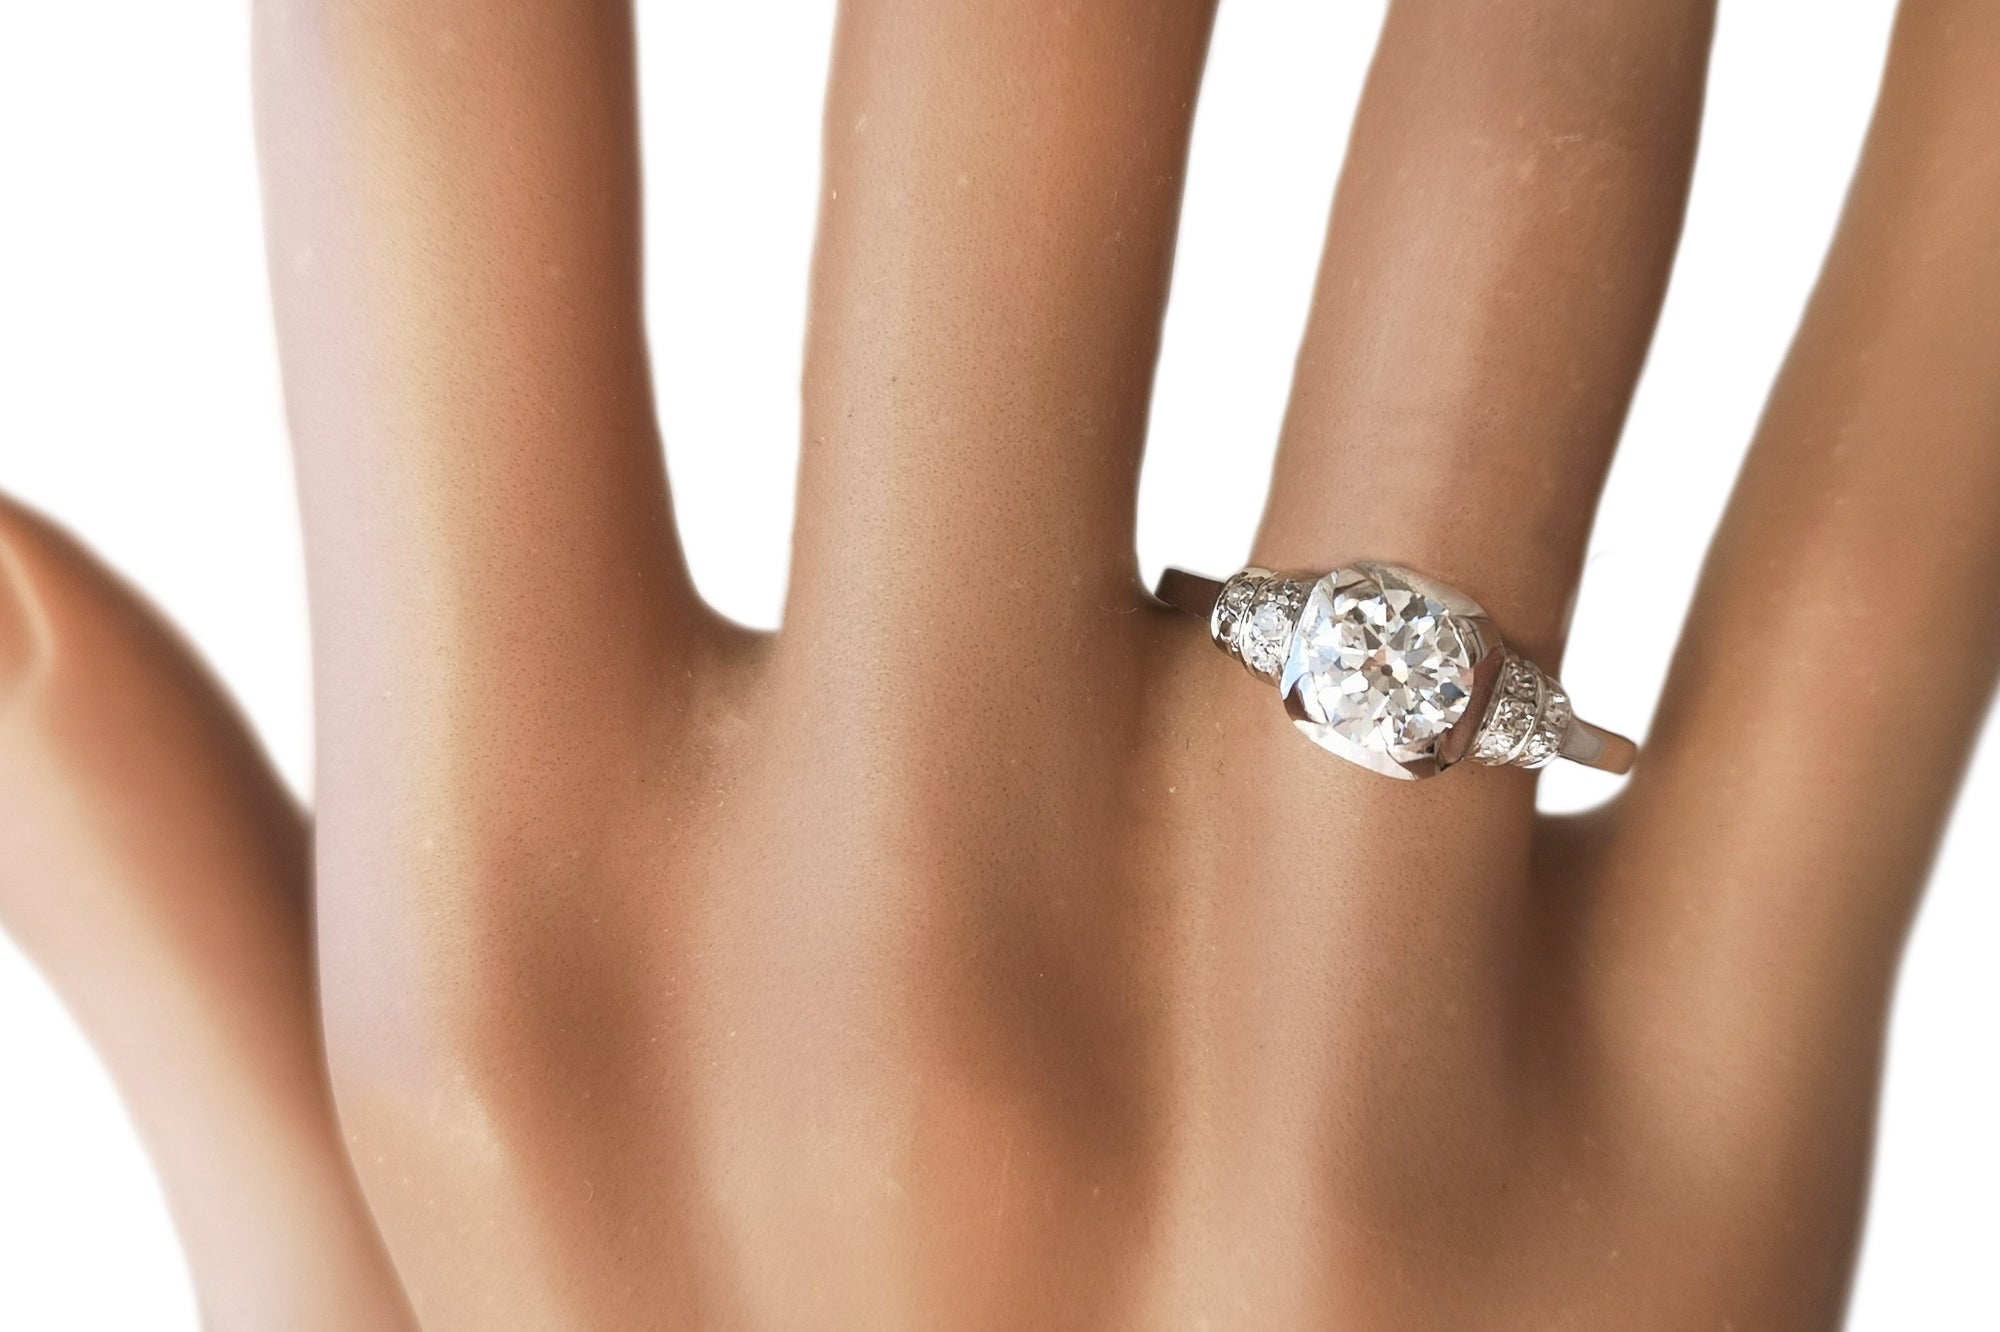 Art Deco 0.75ct Old Cut Diamond Engagement Ring on finger